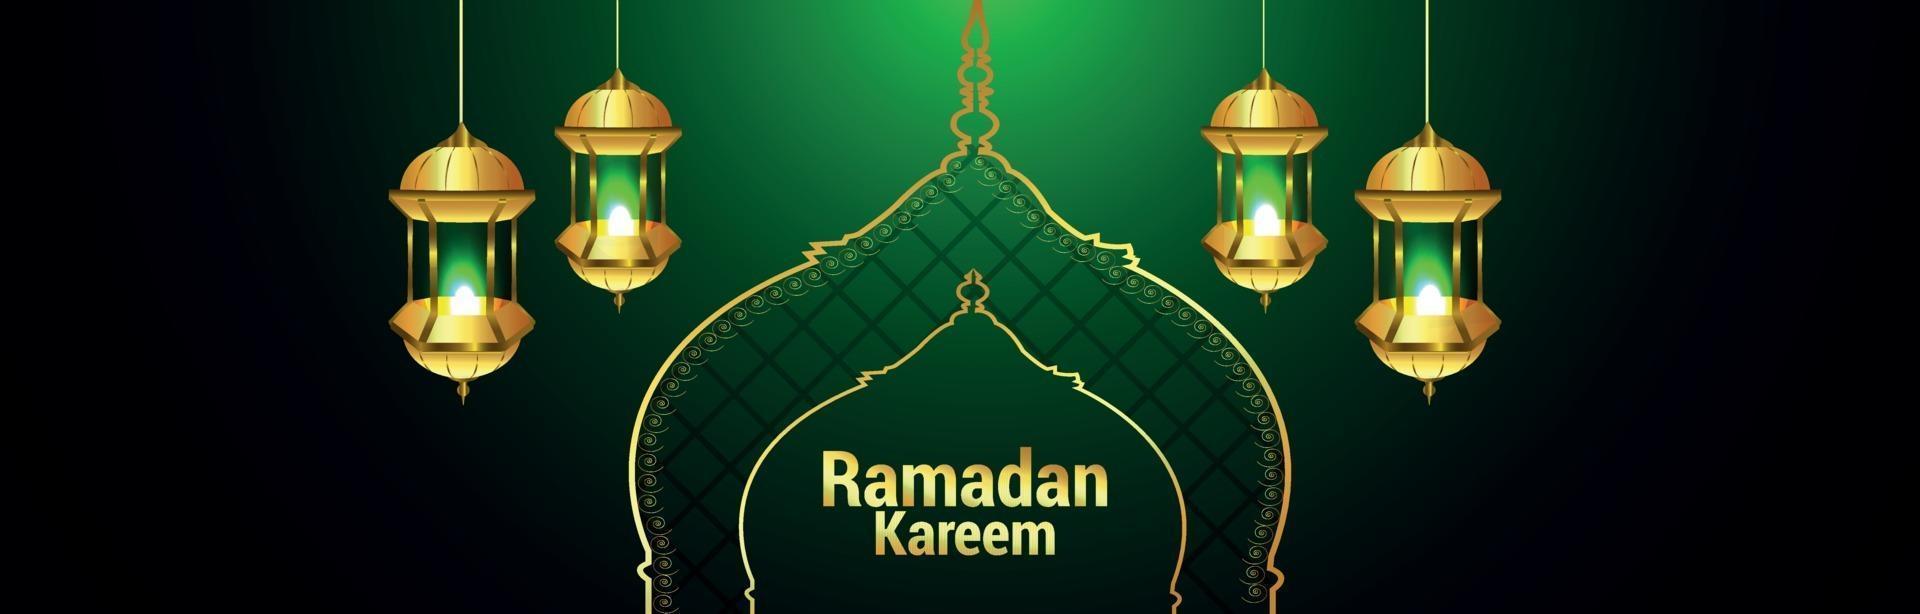 Ramadan kareem banner or header with golden lantern vector